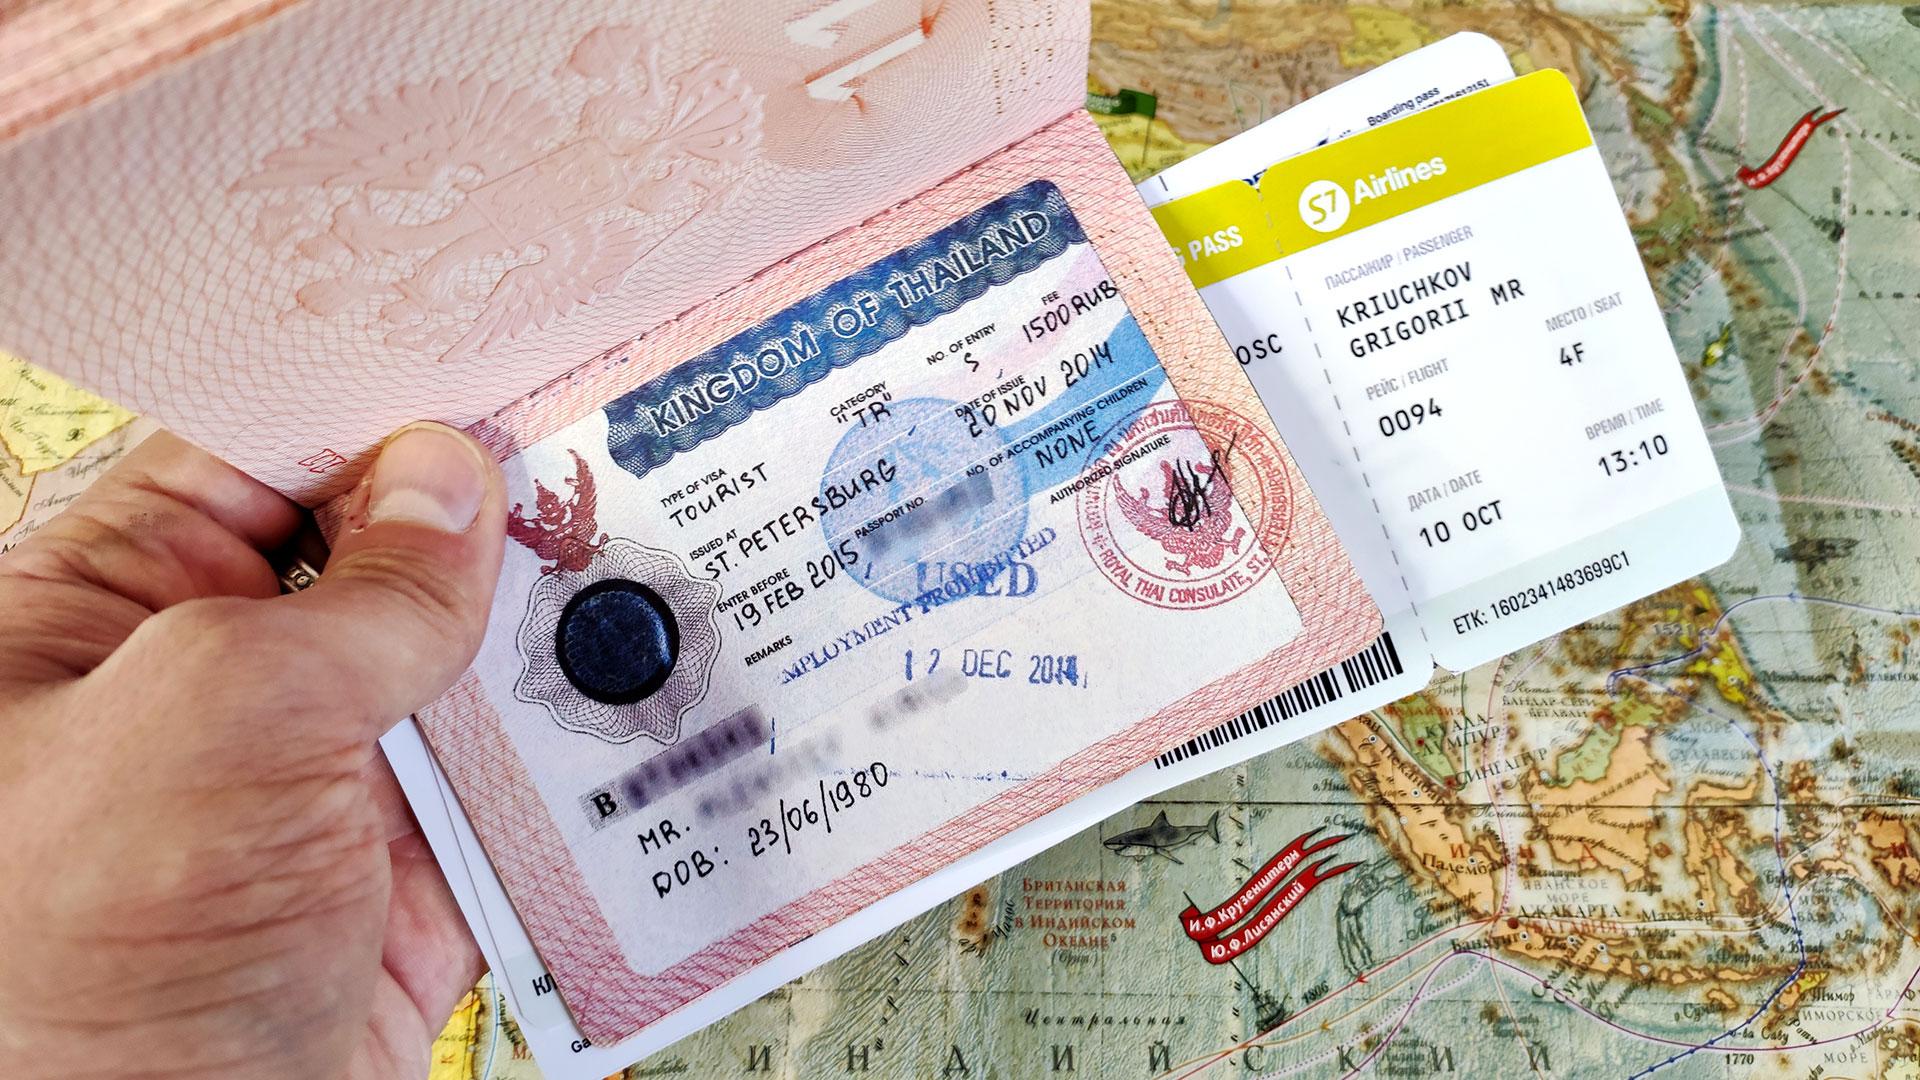 Нужна ли виза в тайланд - виды виз, сроки действия, продление